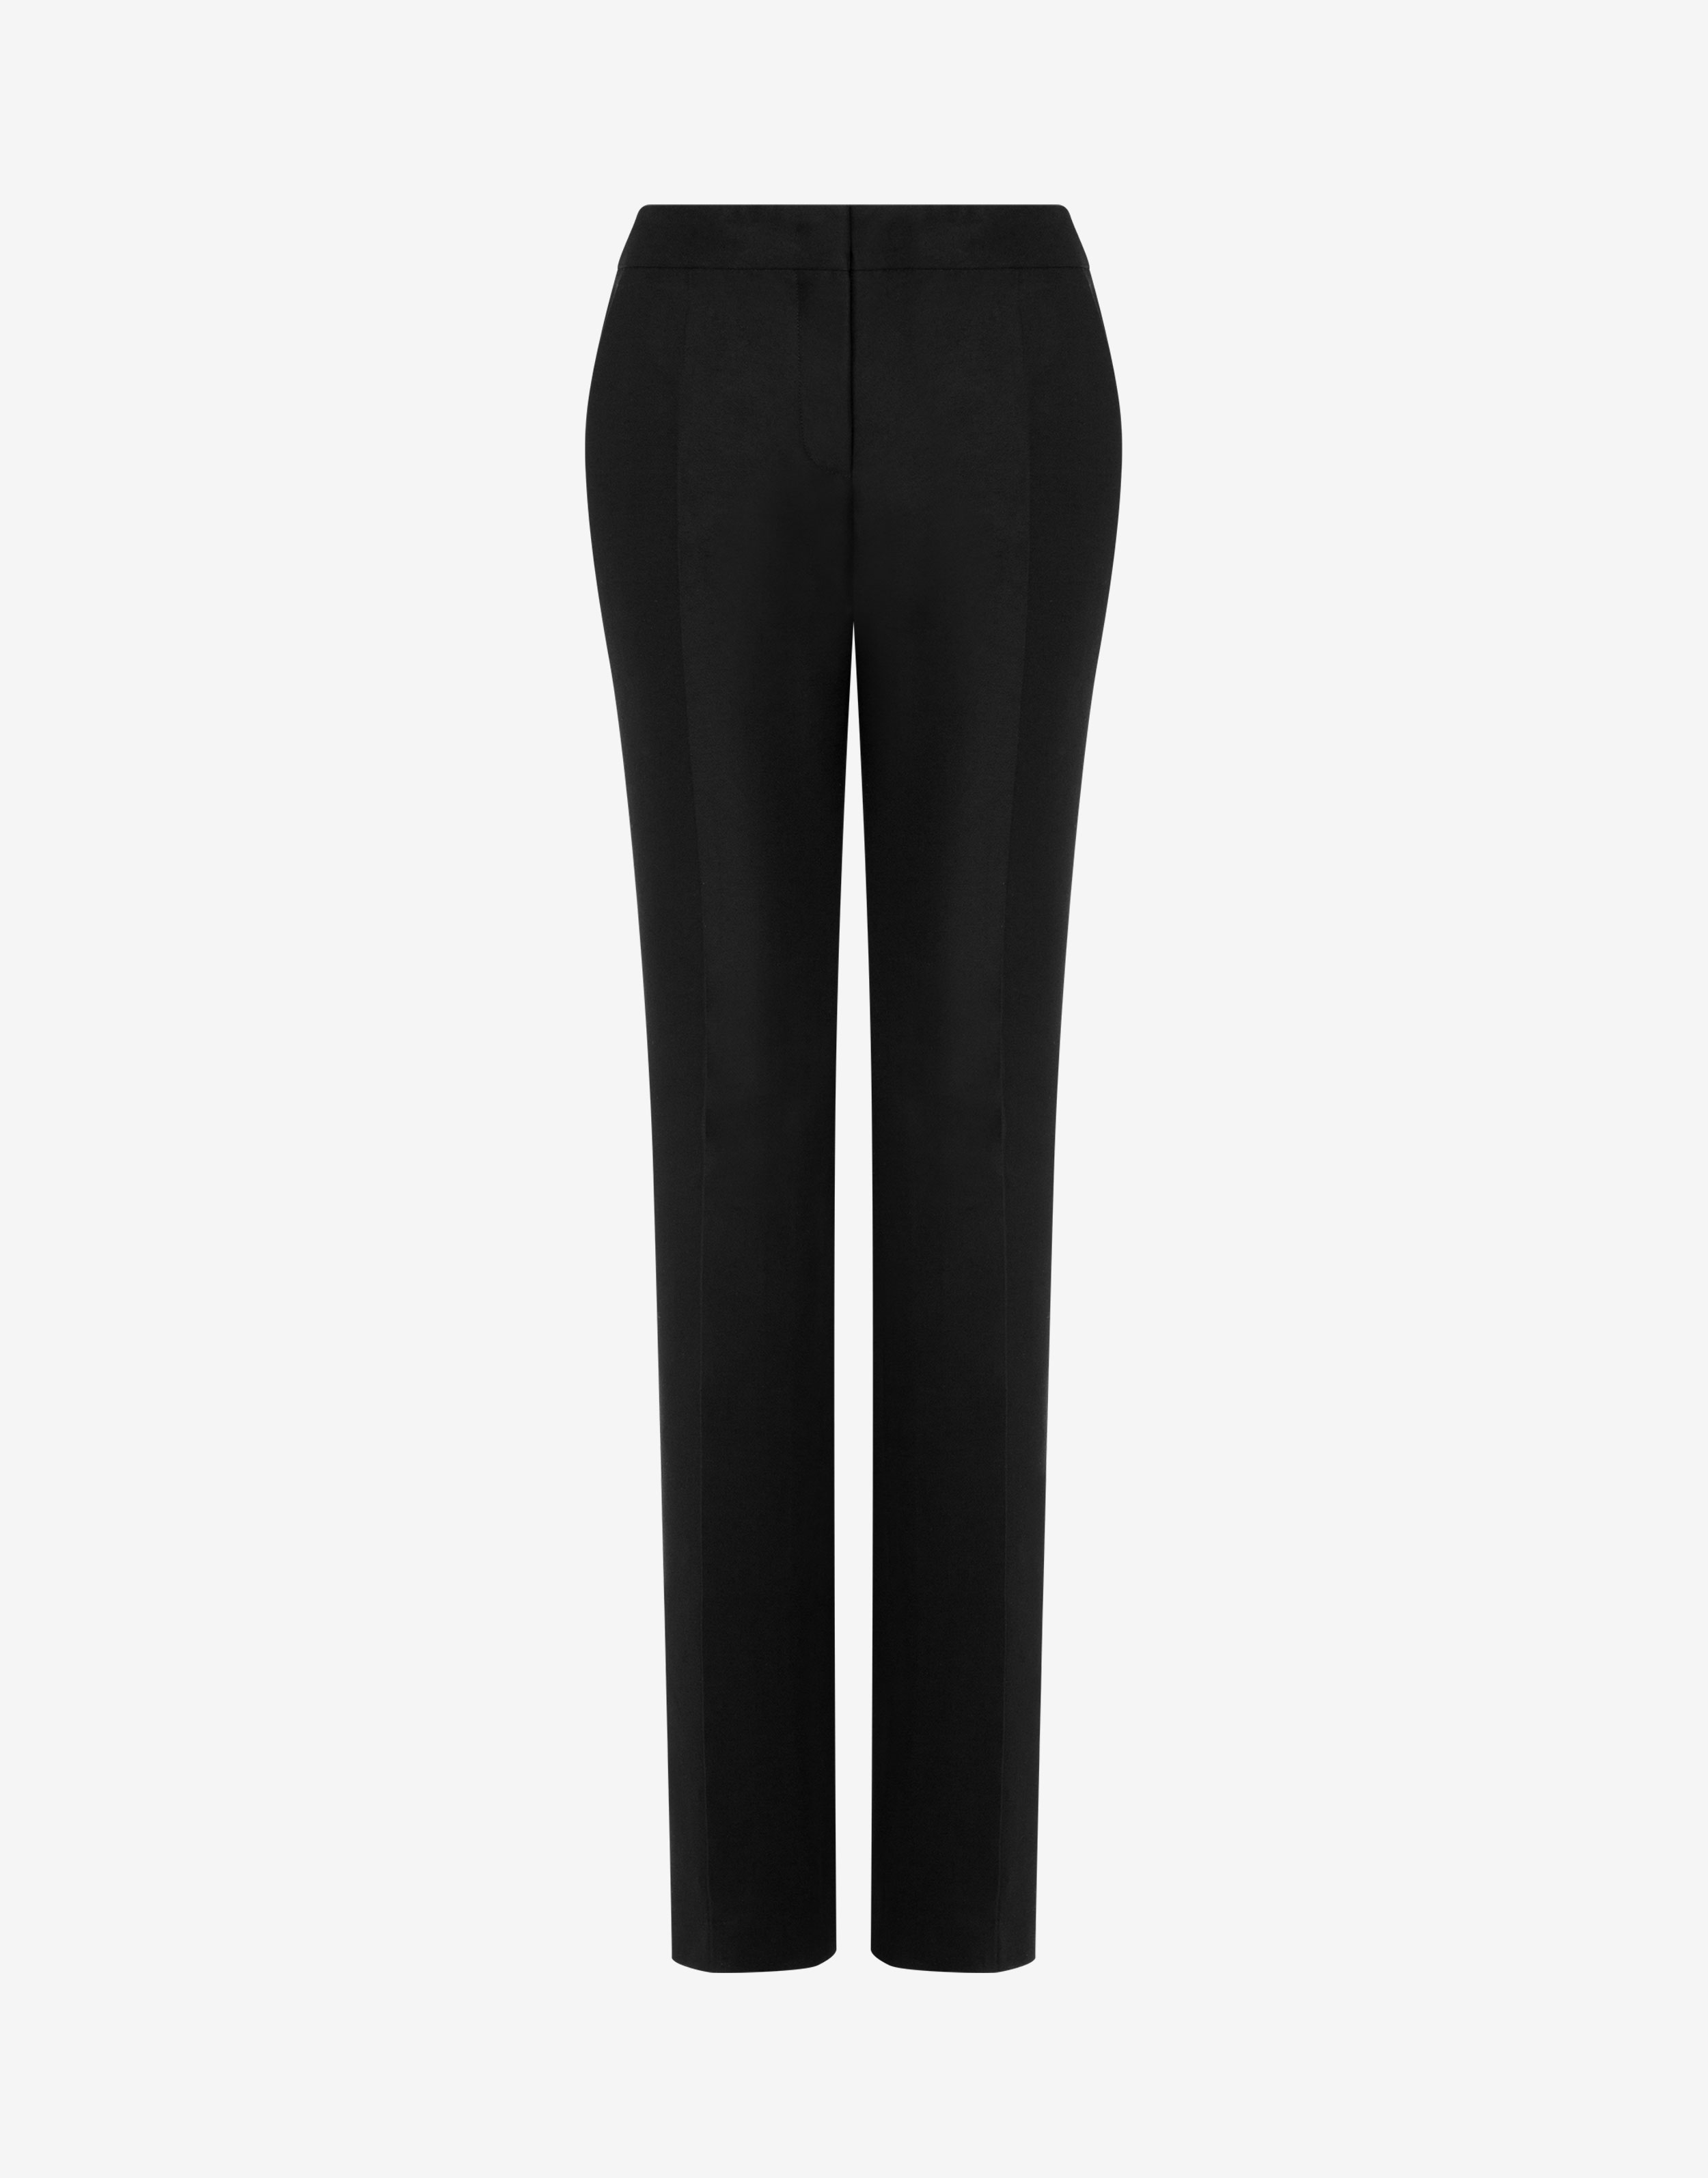 Classic Pants Office Trousers - Black - Wholesale Womens Clothing Vendors  For Boutiques